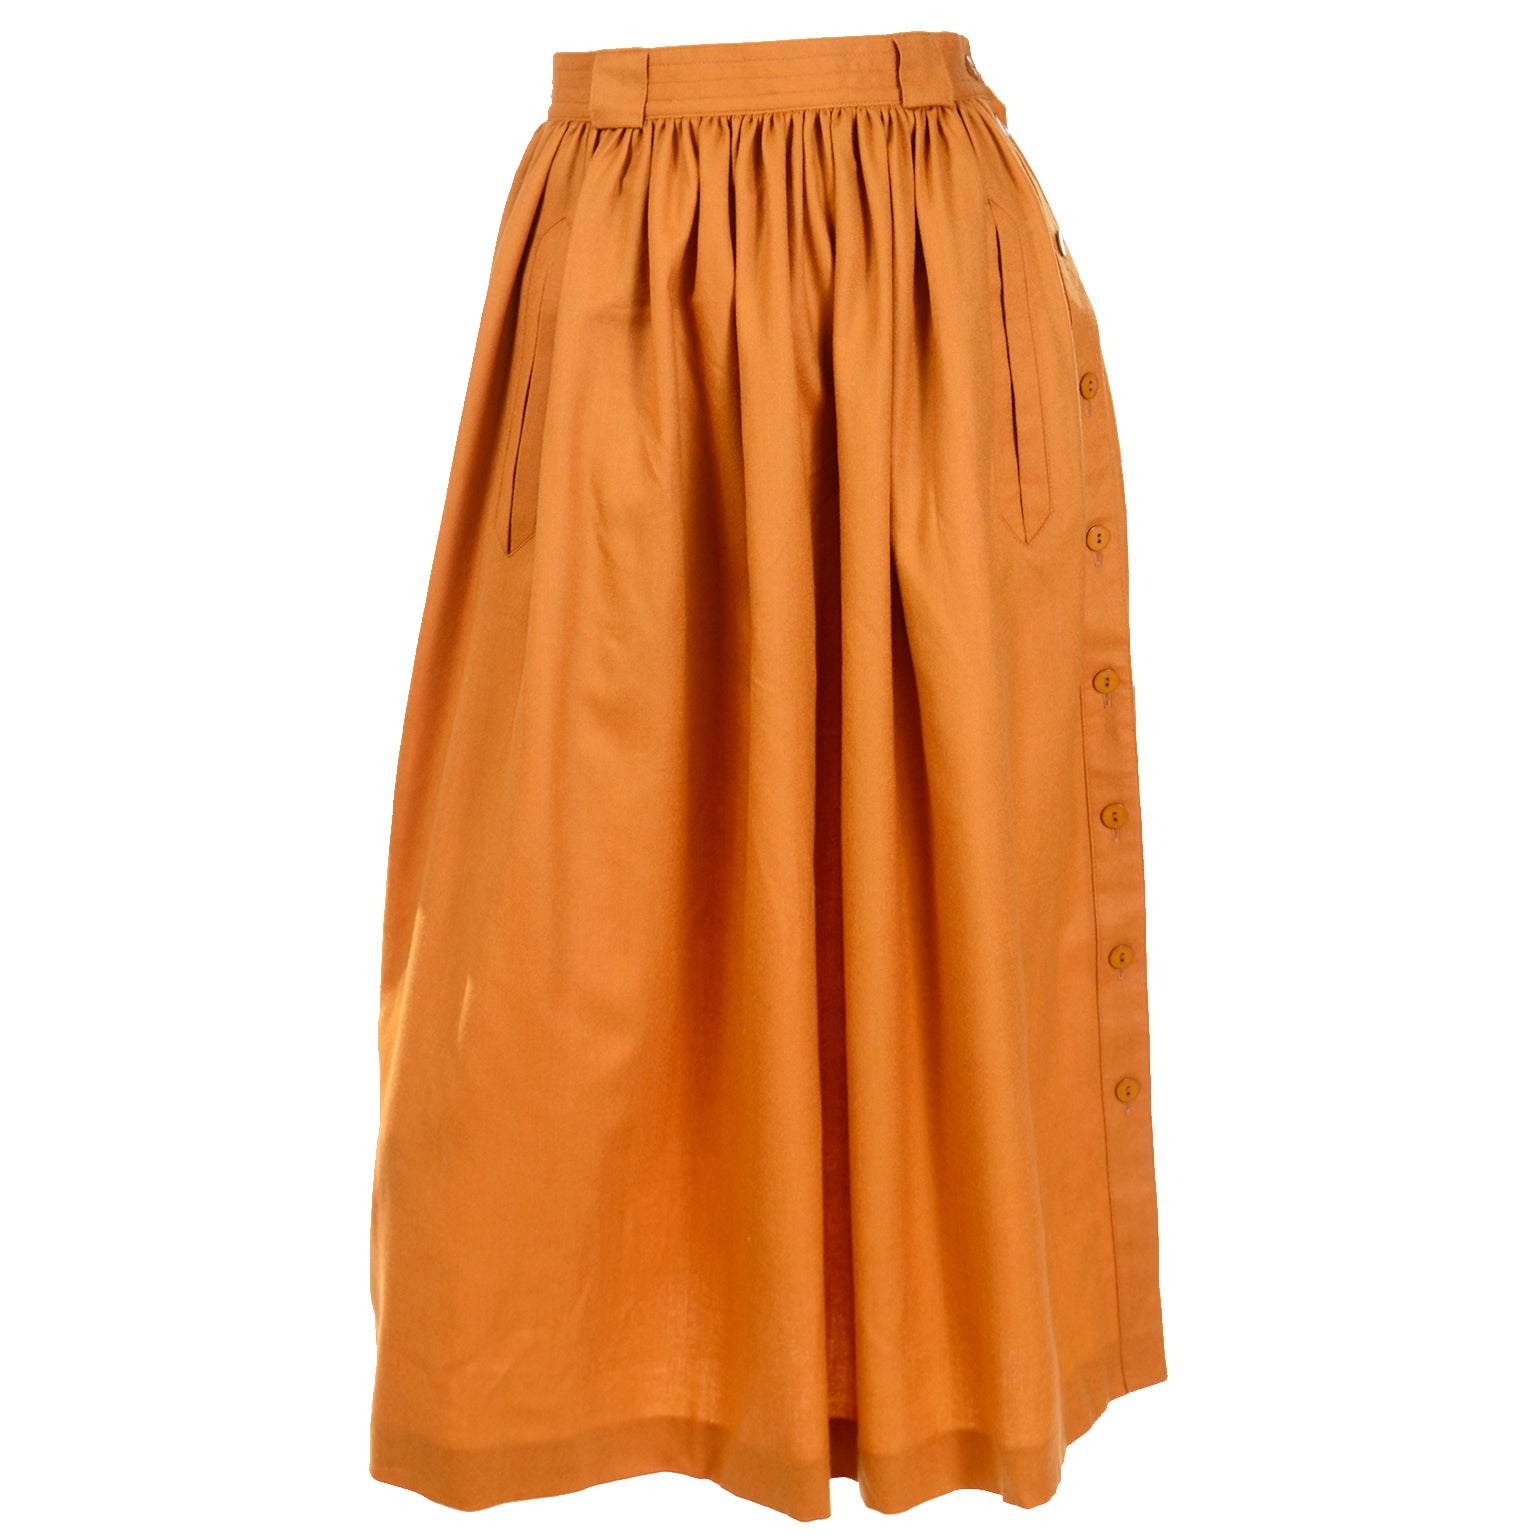 1980s Vintage Margaretha Ley Escada Green Linen Pants W Original